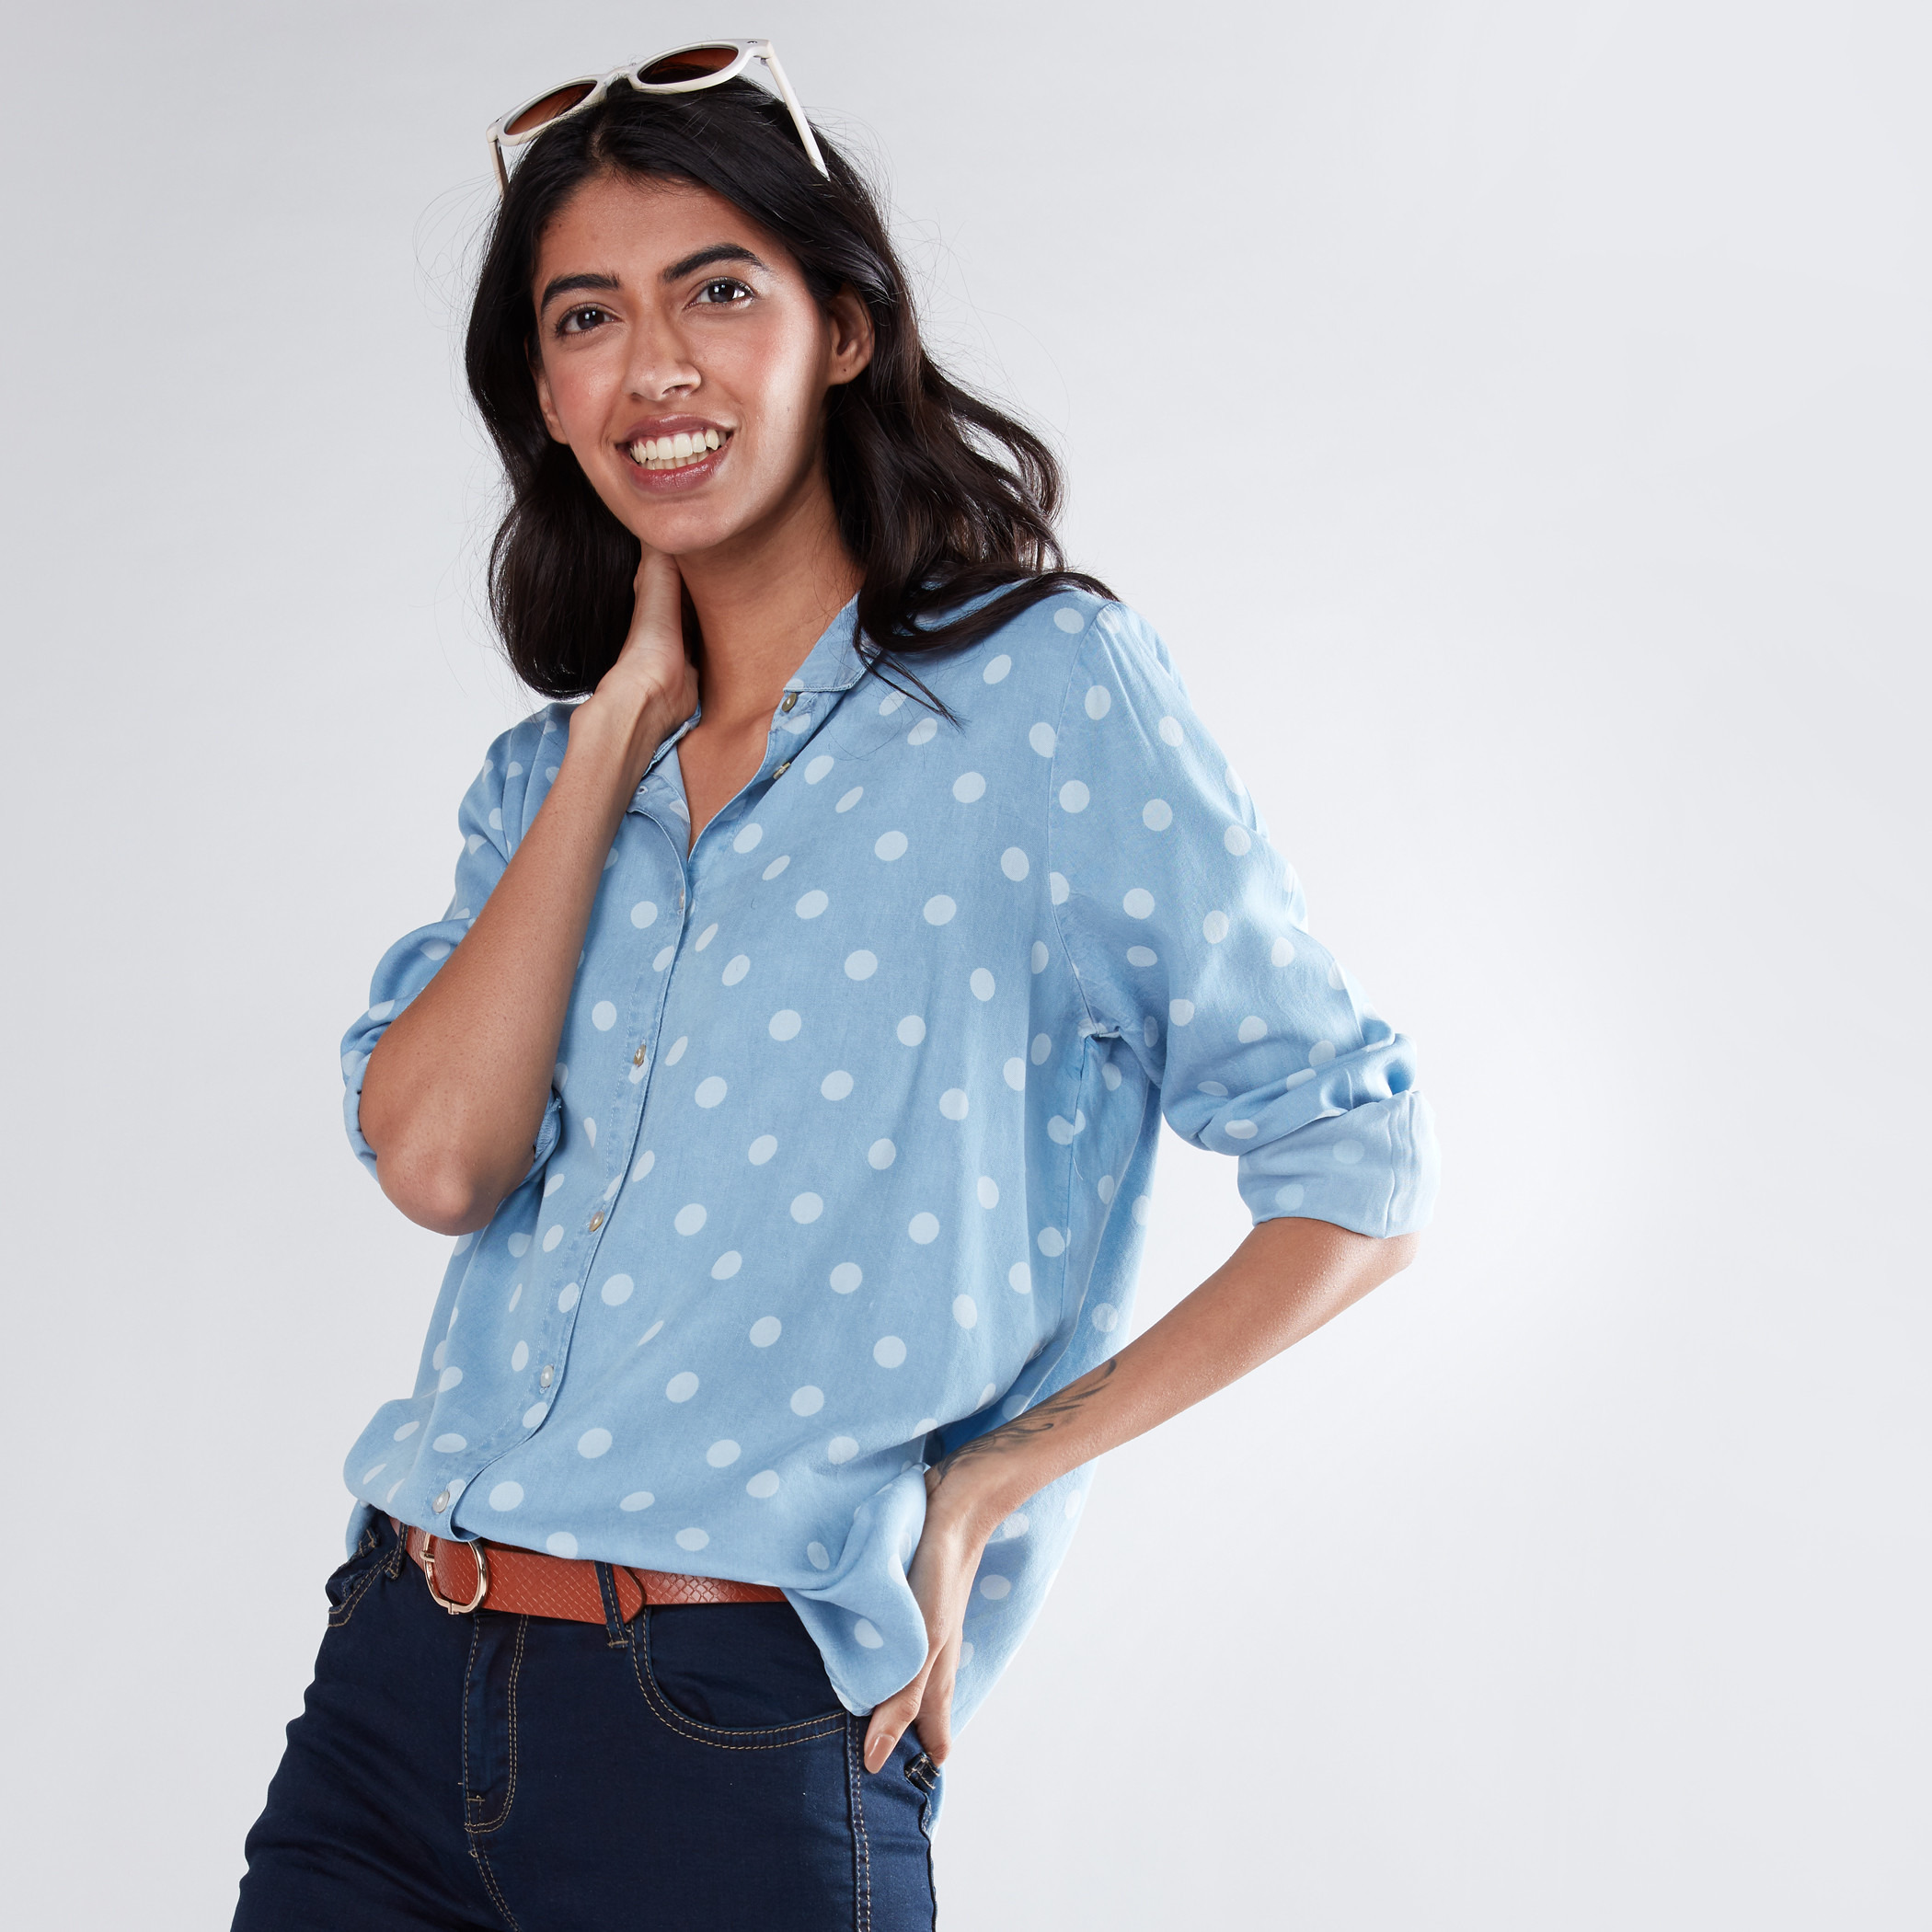 EJUMMP Women's Casual Polka Dot Tops Blouse Fashion V Neck Laple Collar  Long Sleeve Button Down Shirt Black at Amazon Women's Clothing store